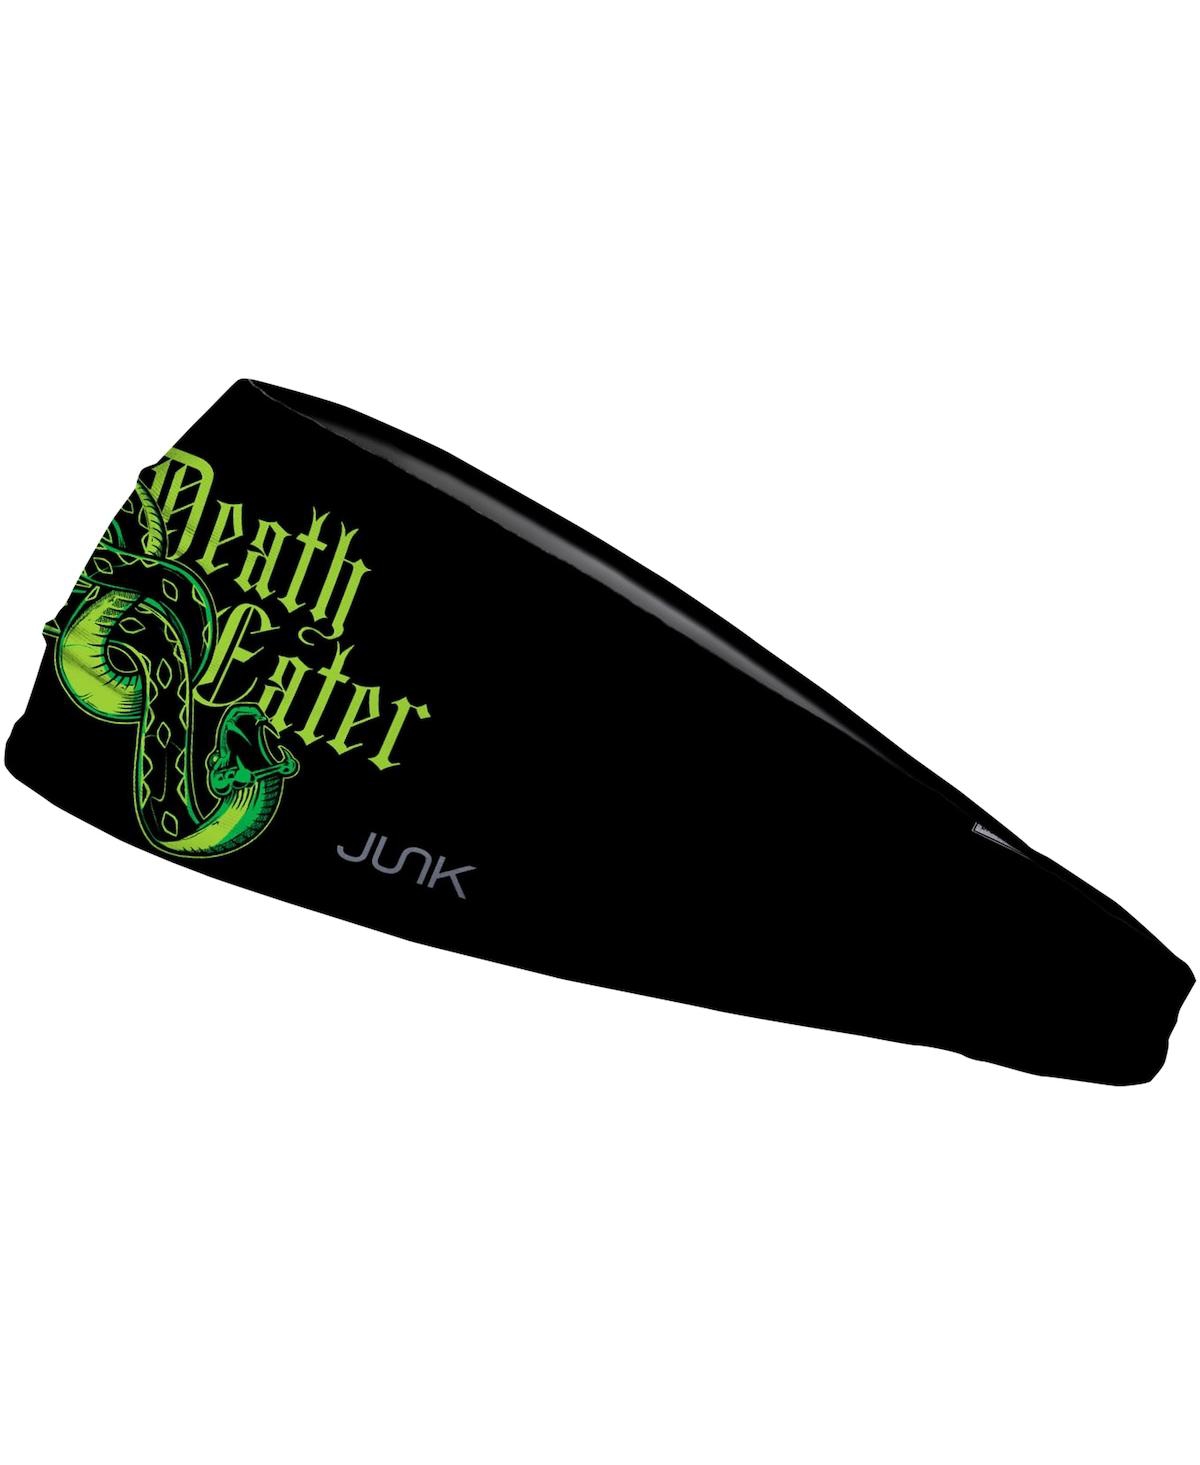 Men's and Women's Harry Potter Death Eater Headband - Black